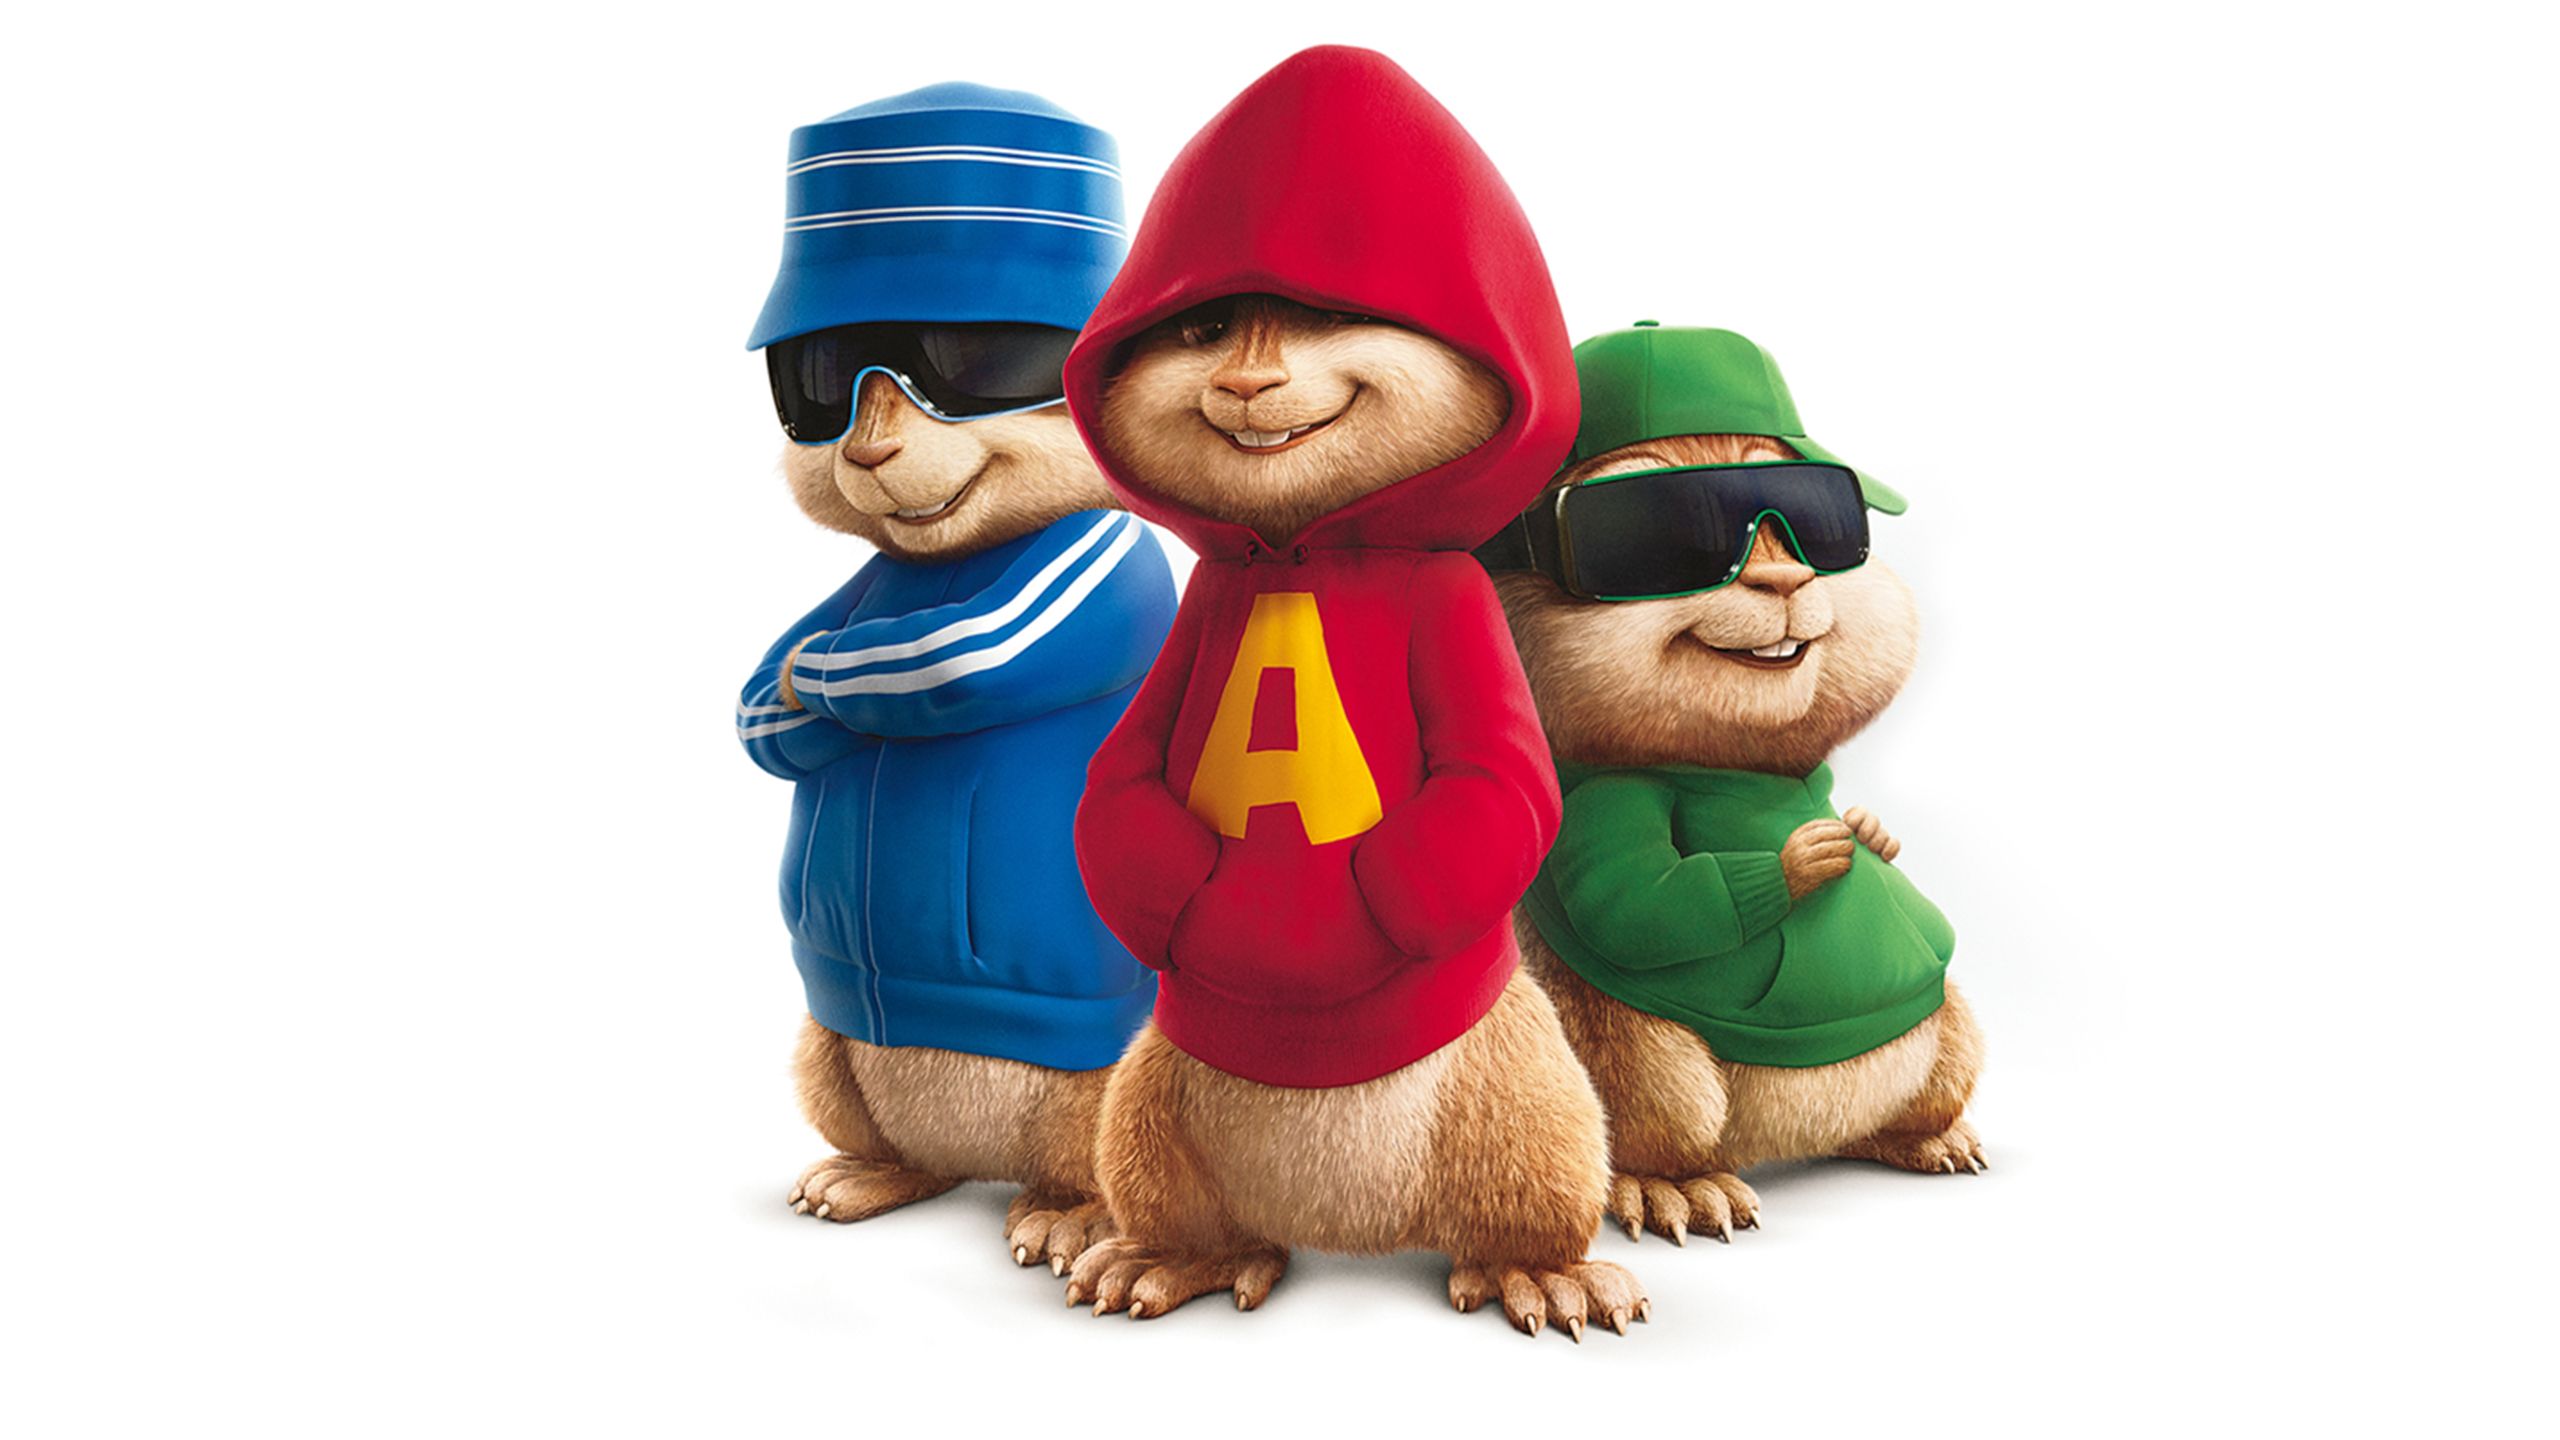 Alvin And The Chipmunks Cartoon 2022